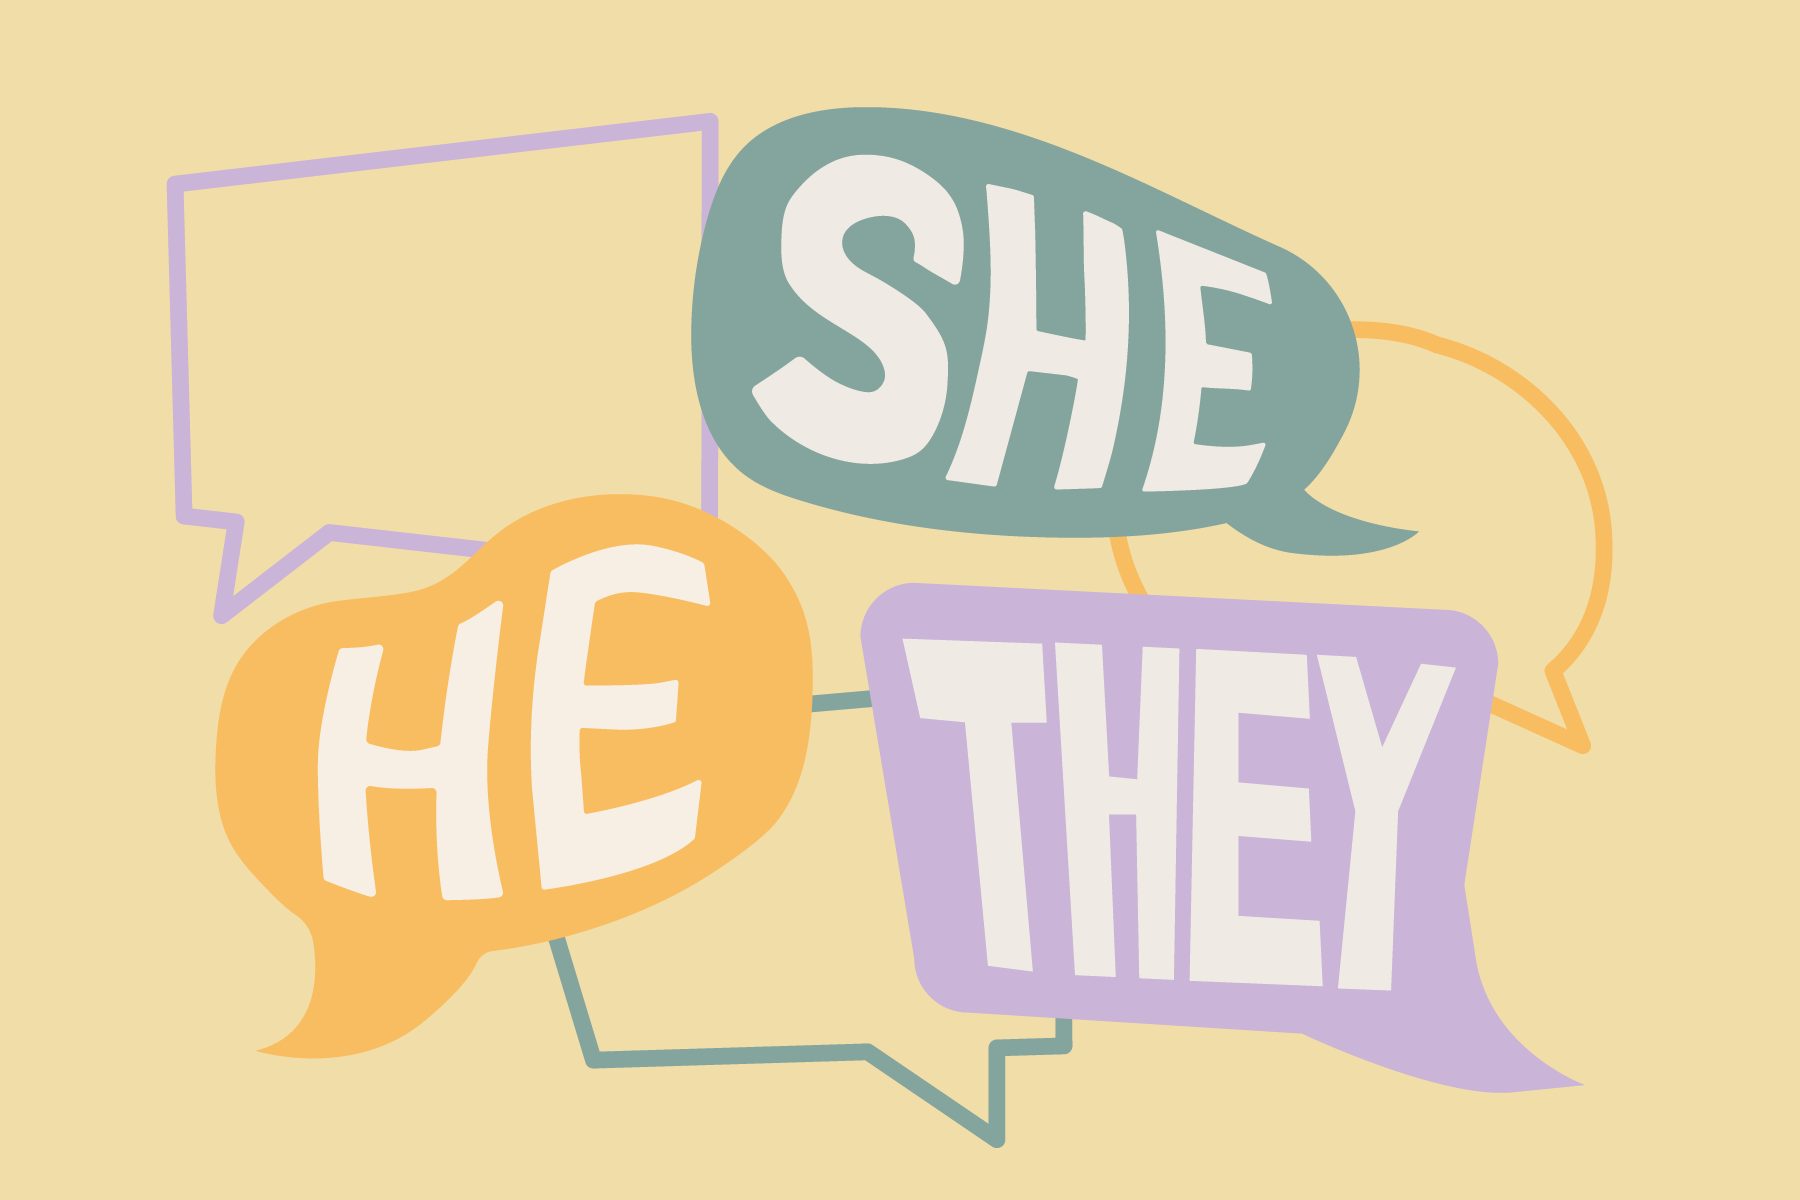 The English language needs gender-neutral pronouns